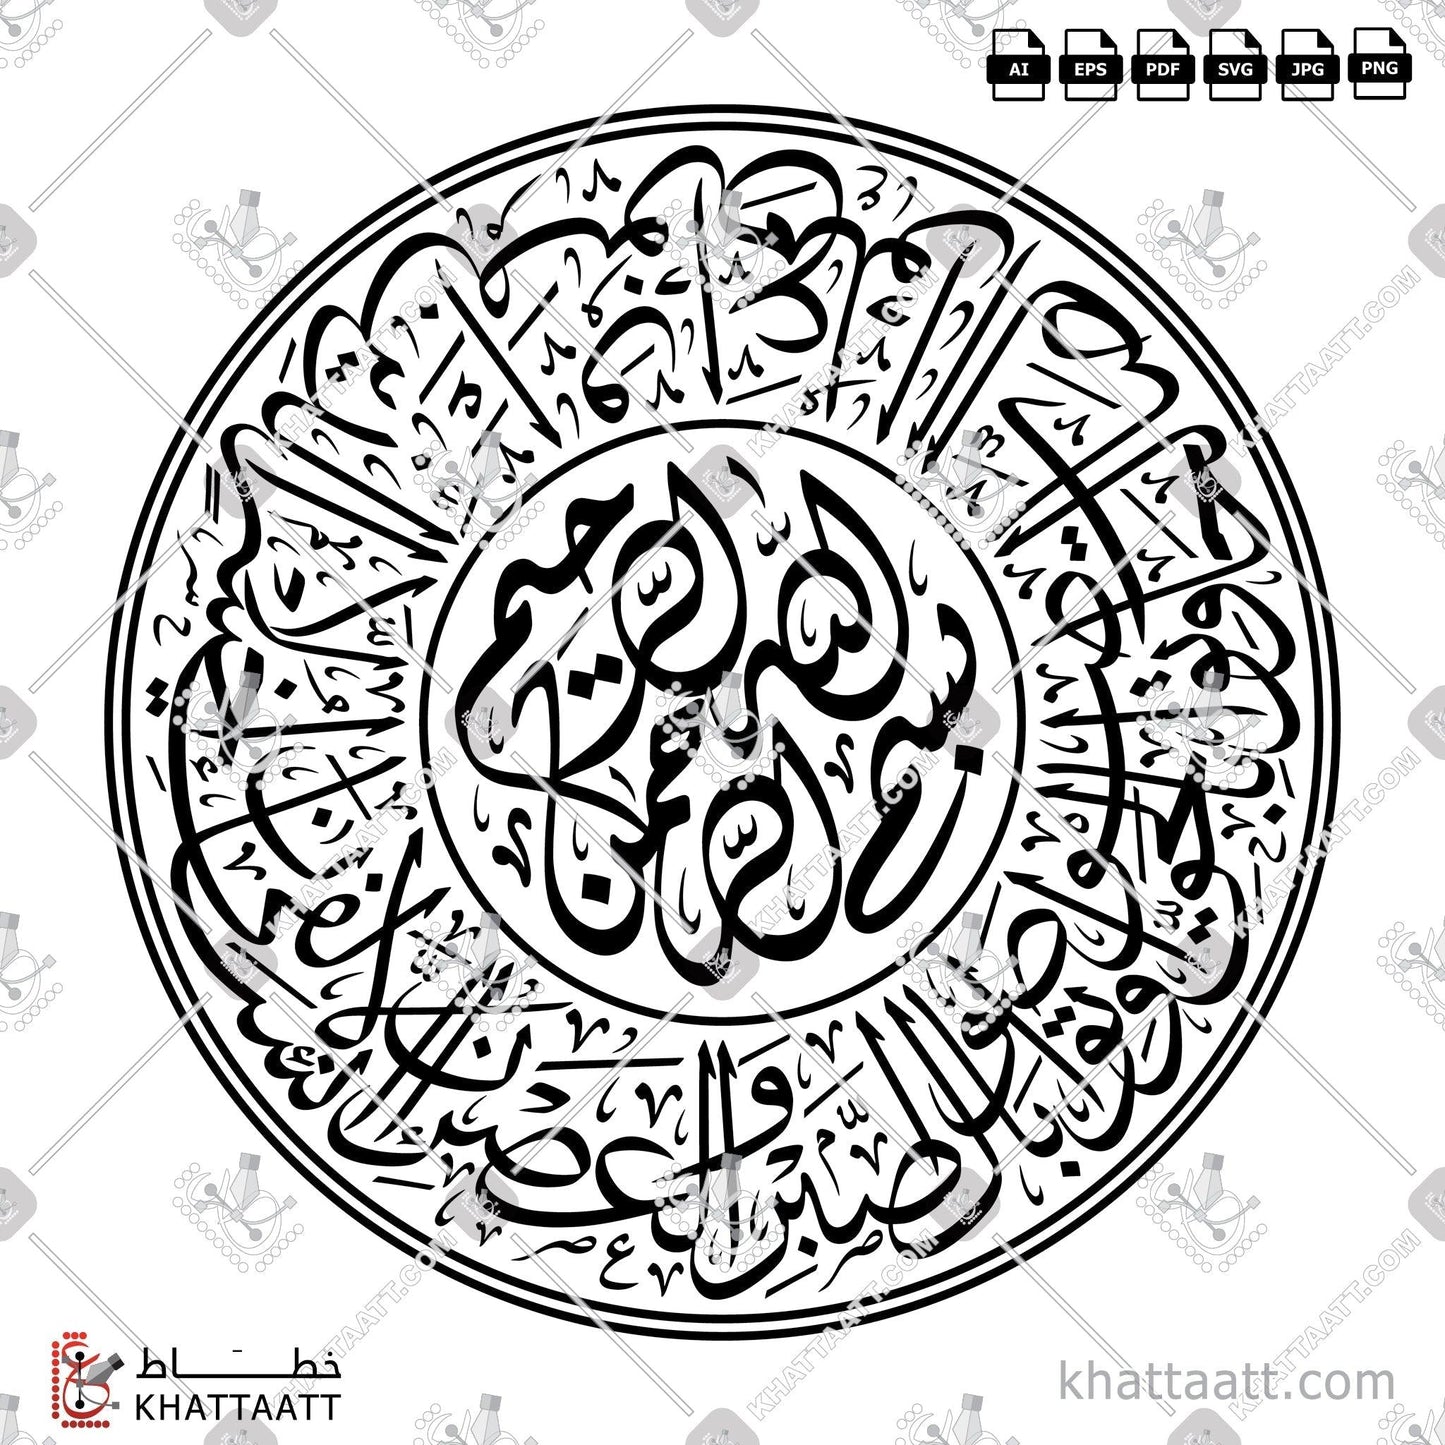 Download Arabic Calligraphy of Surat Al-Asr - سورة العصر in Thuluth - خط الثلث in vector and .png